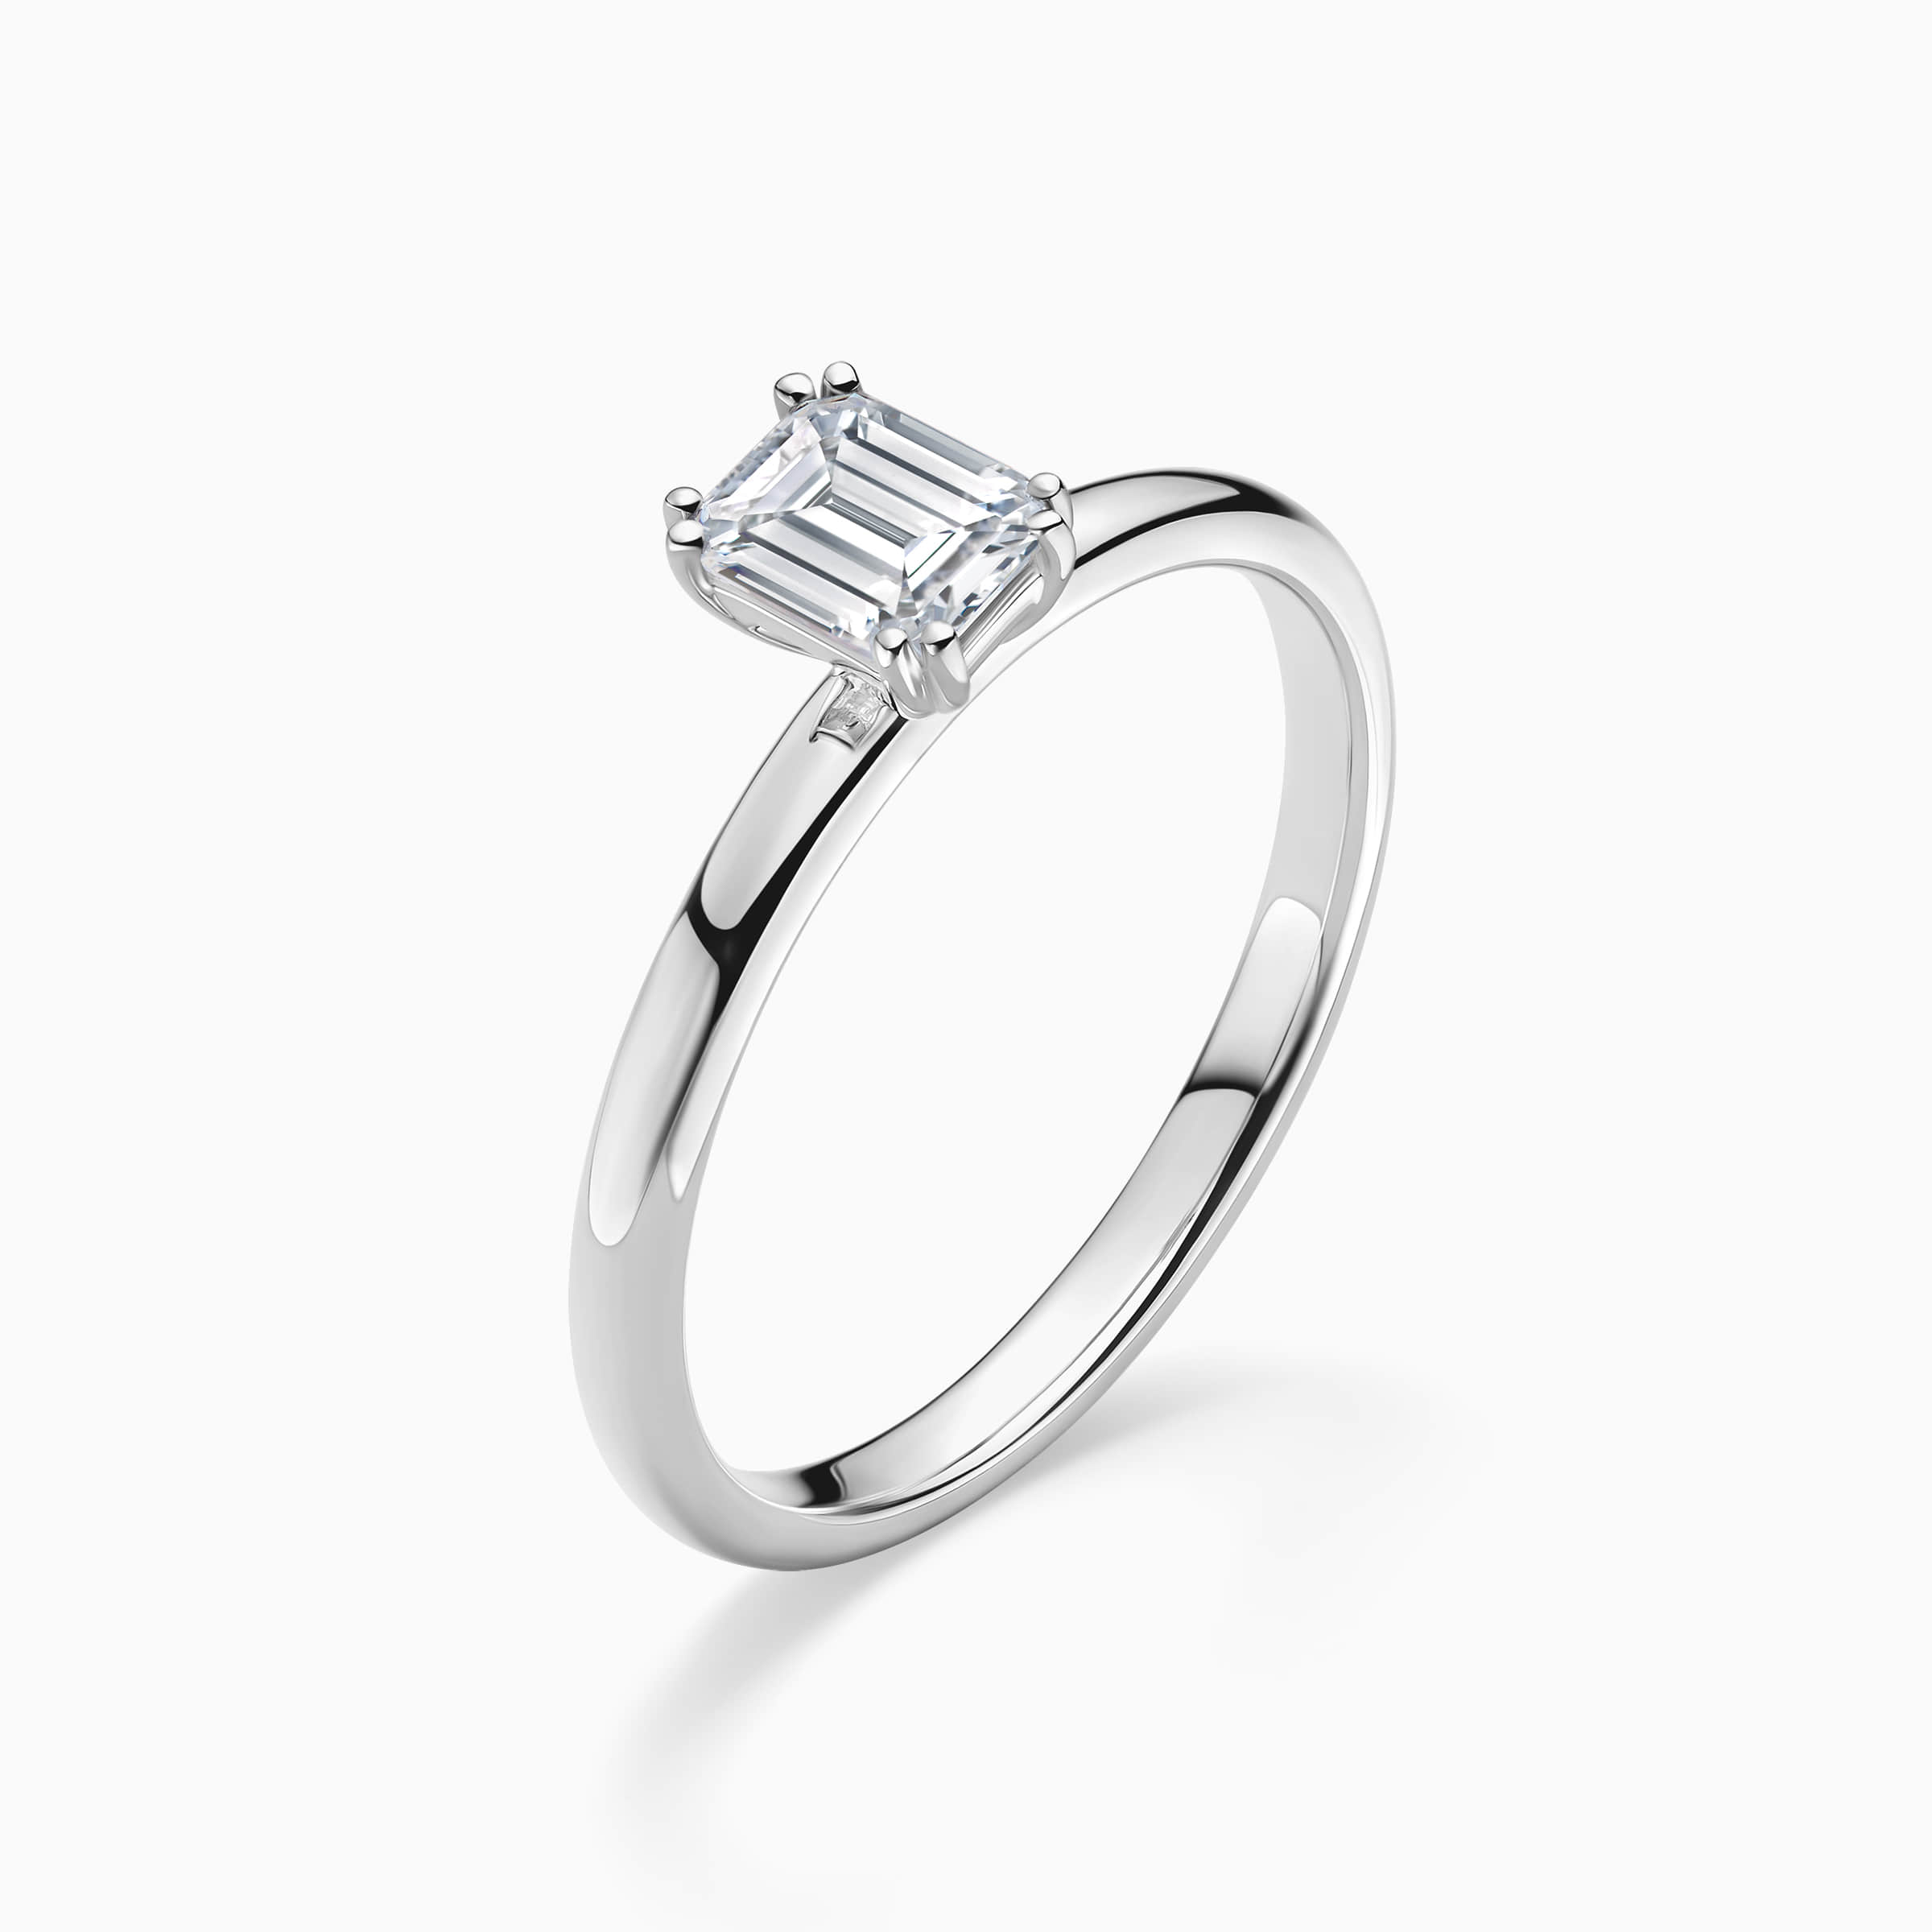 Darry Ring 2 carat emerald cut diamond engagement ring platinum